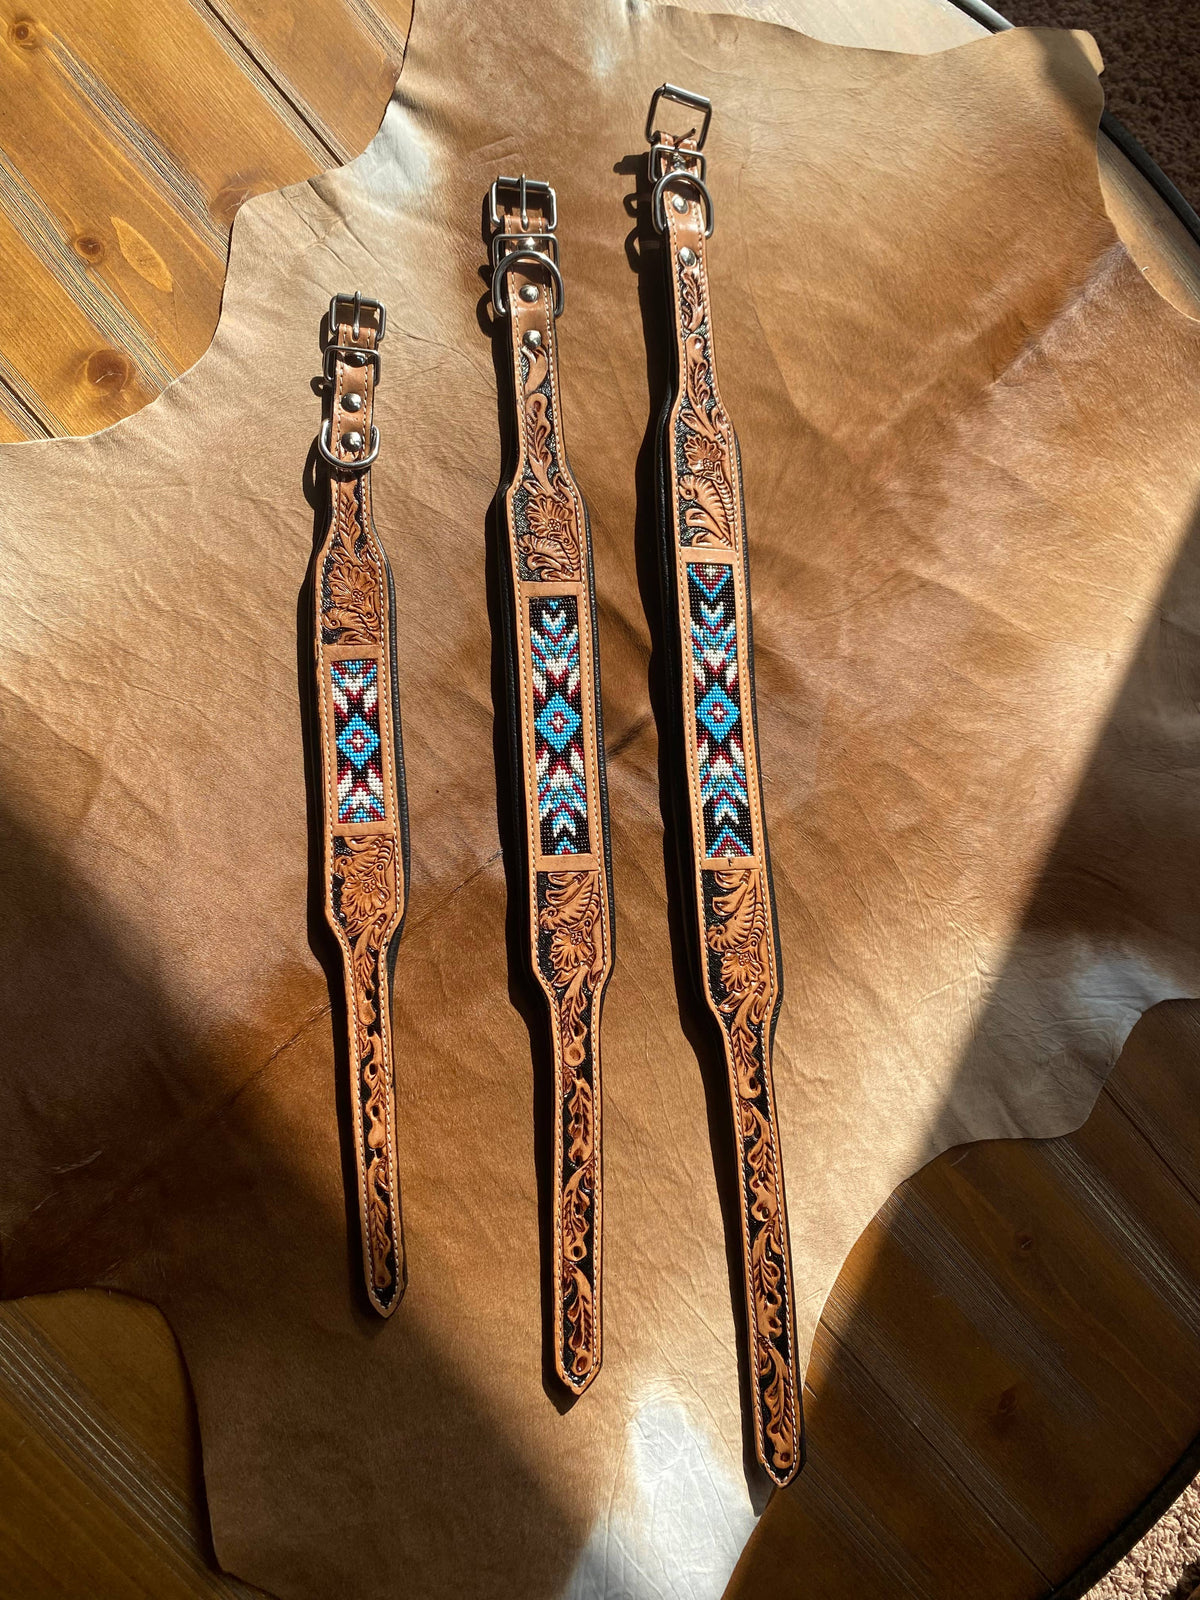 Western Aztec Turquoise Leather Beaded Dog Collar